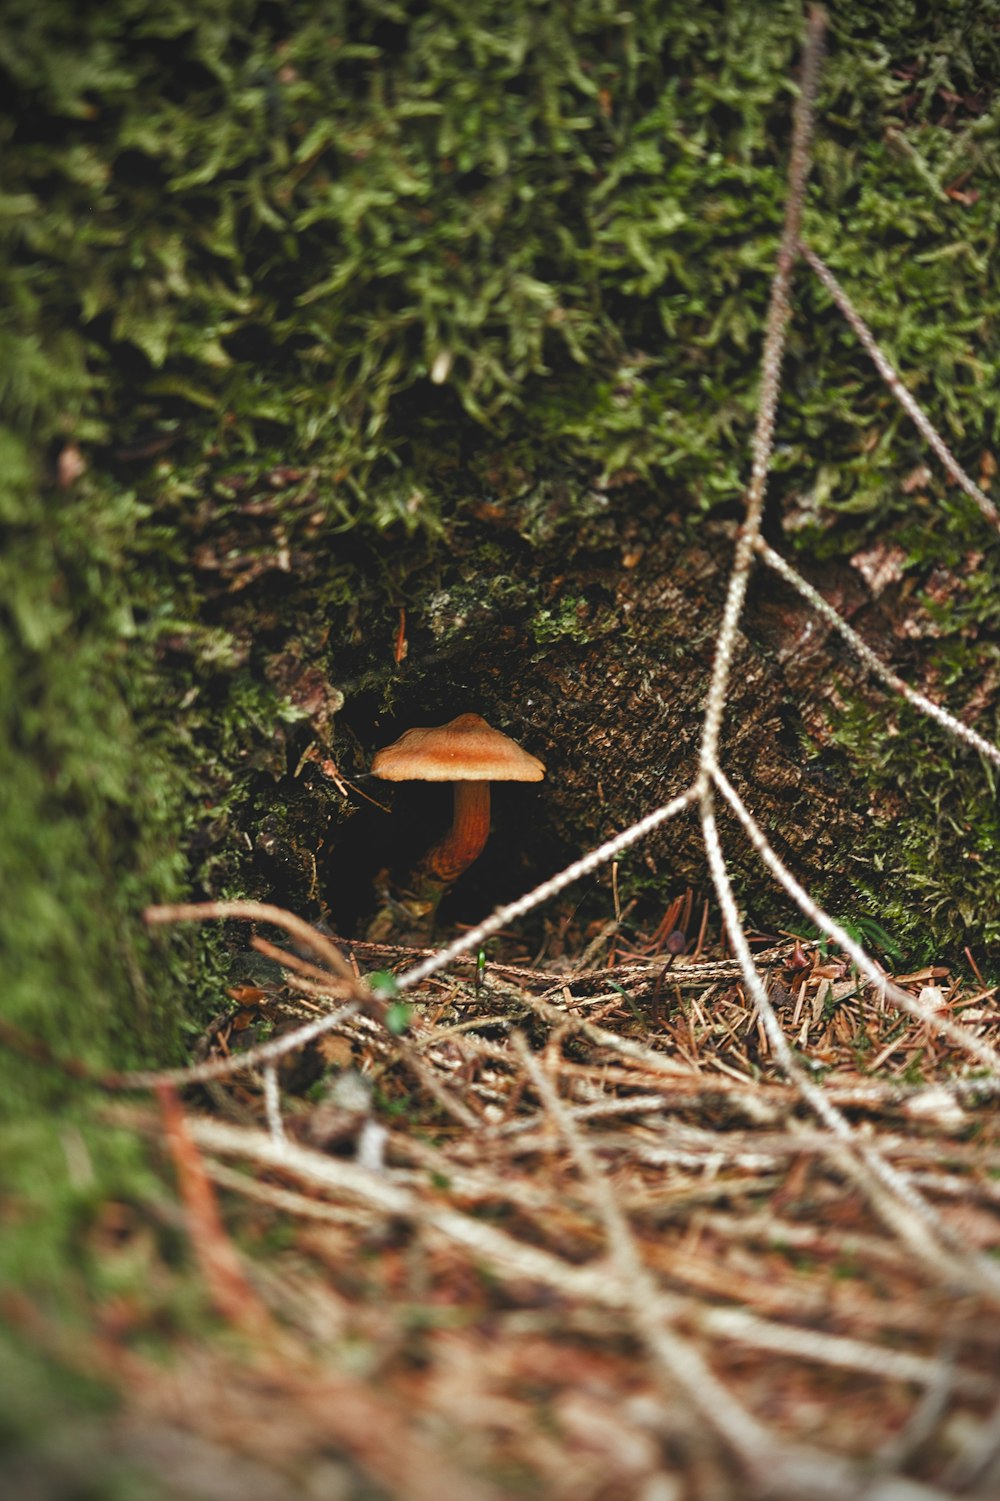 brown mushroom on green moss